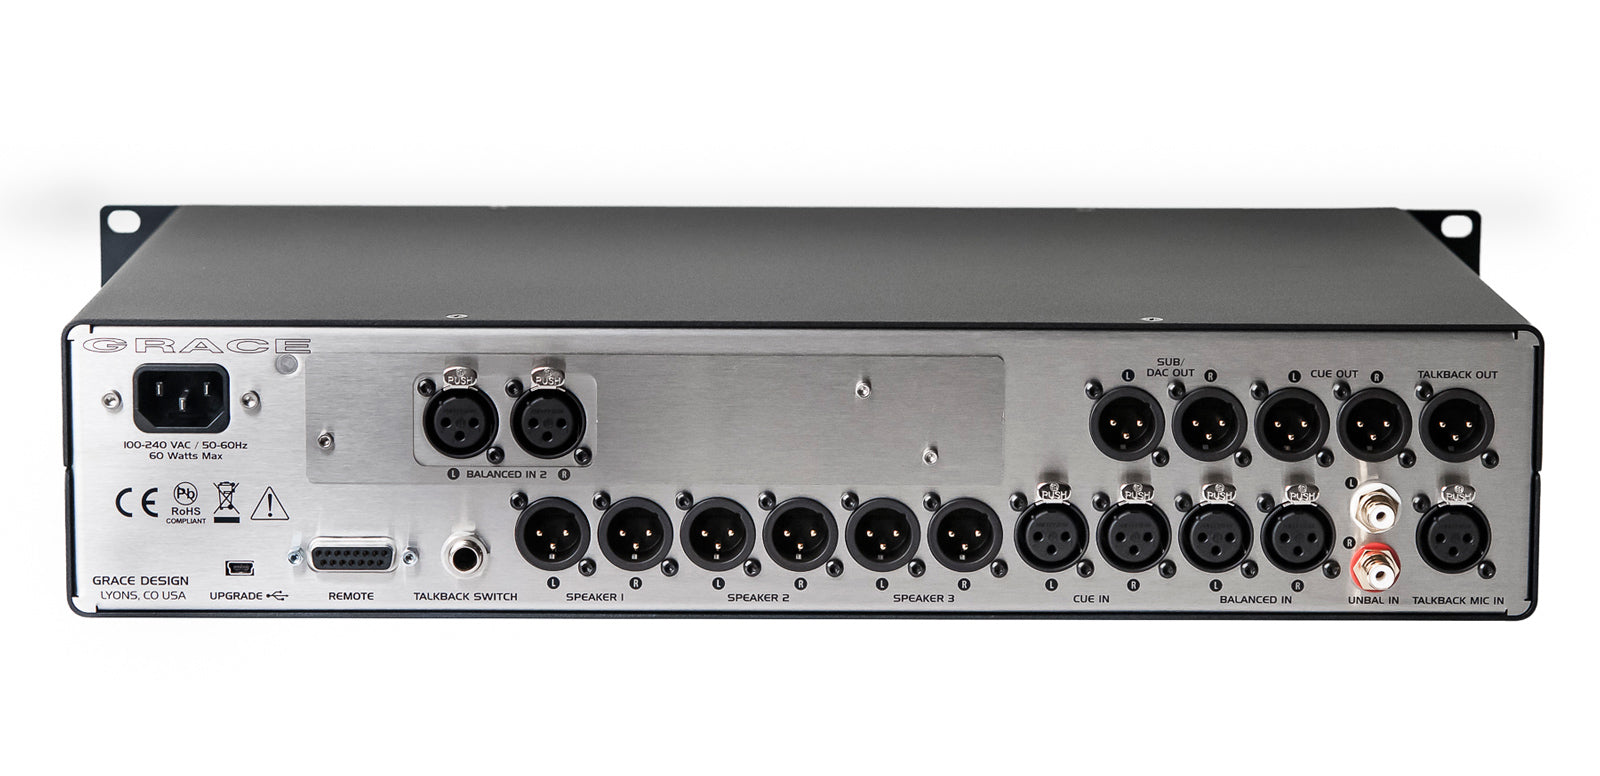 Grace Design m905 high fidelity stereo monitor system-Analog Version